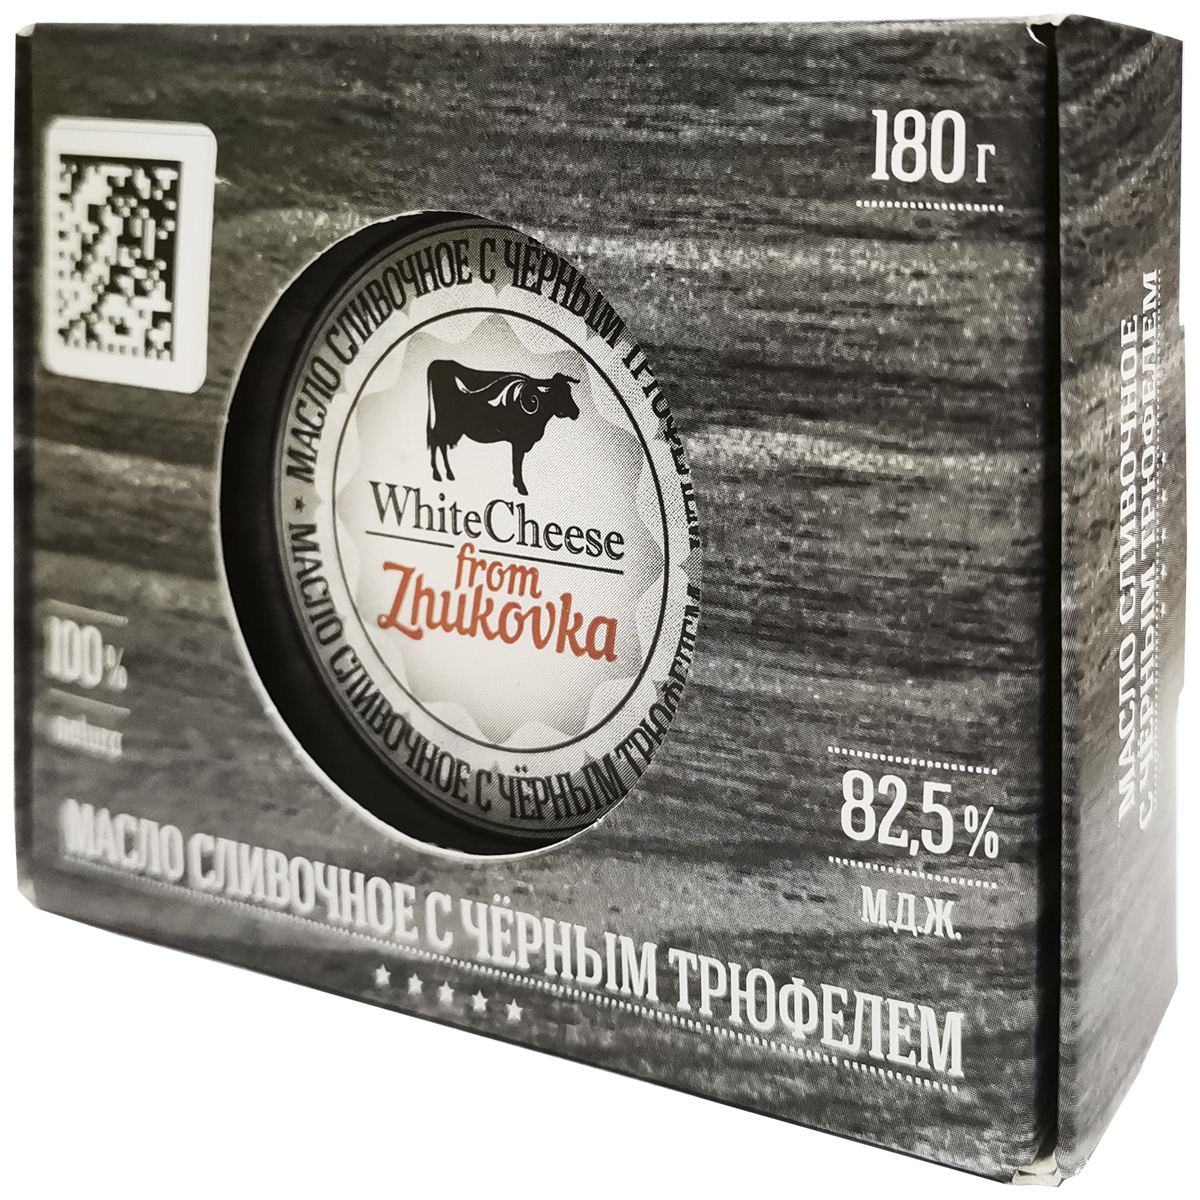 фото Сливочное масло несоленое white cheese from zhukovka с черным трюфелем 82,5% 180 г